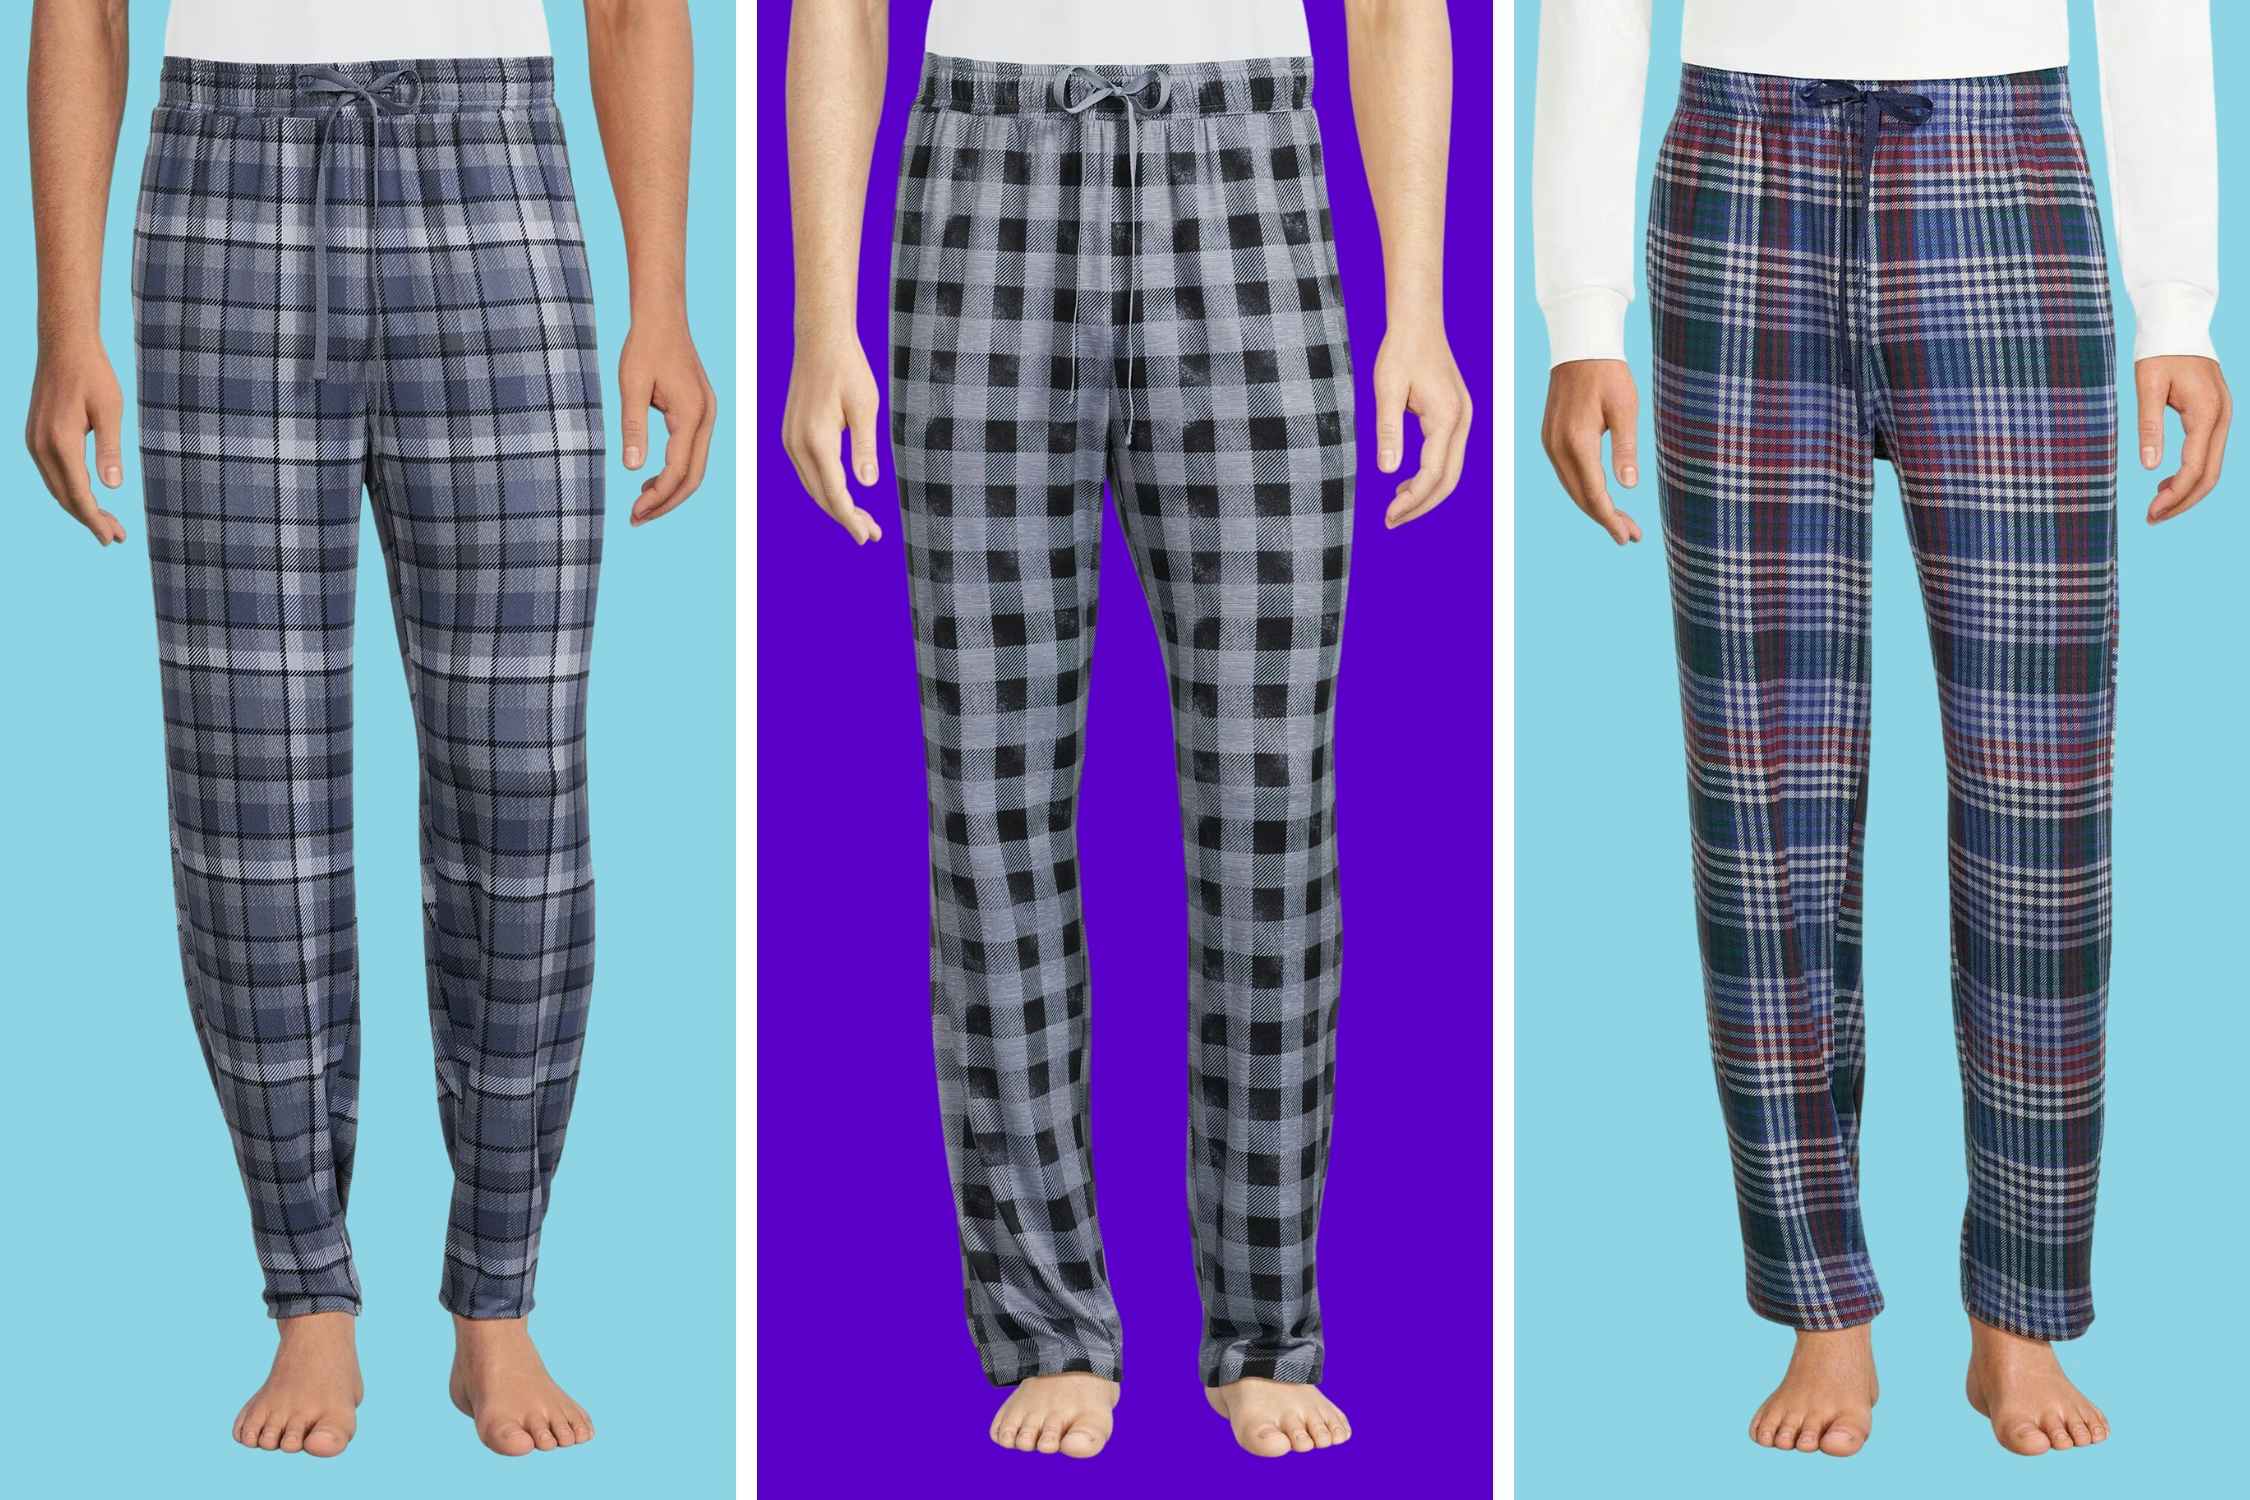 Men’s Pajama Pants at Walmart: Clearance Prices Starting at Just $6